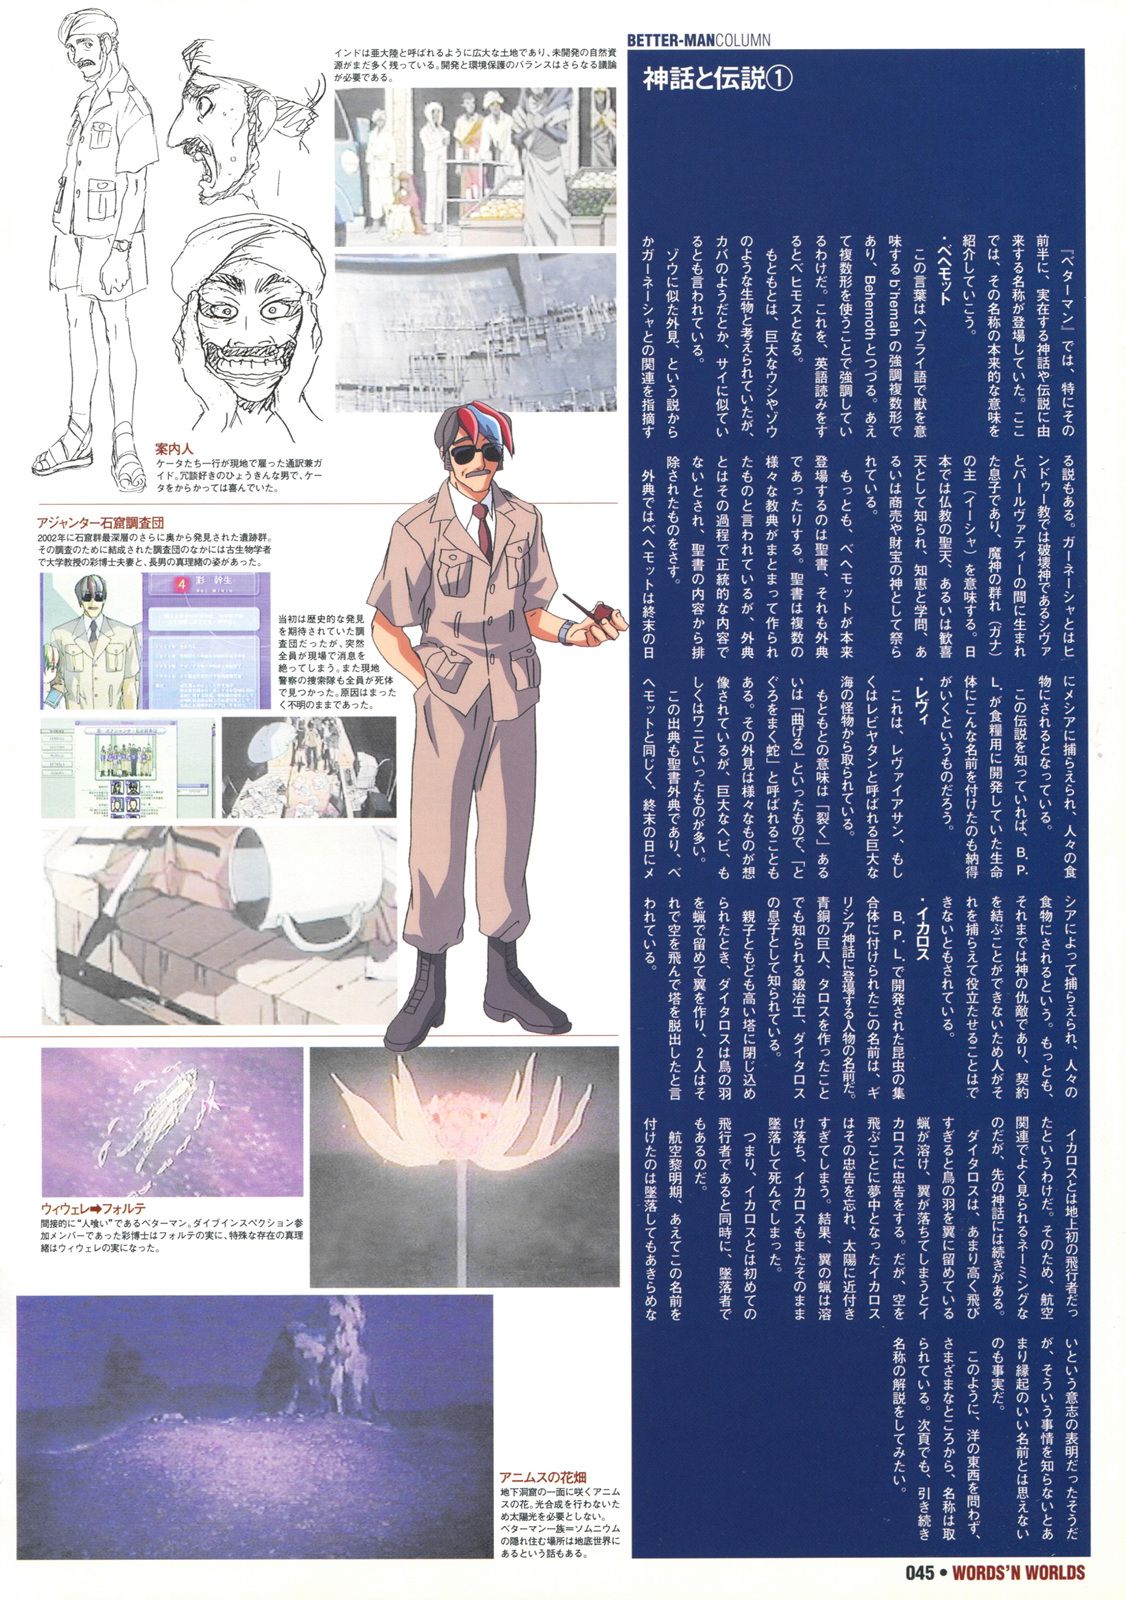 BETTERMAN COMPLETE BOOK 鑑-kagami- - 第02卷(1/3) - 5